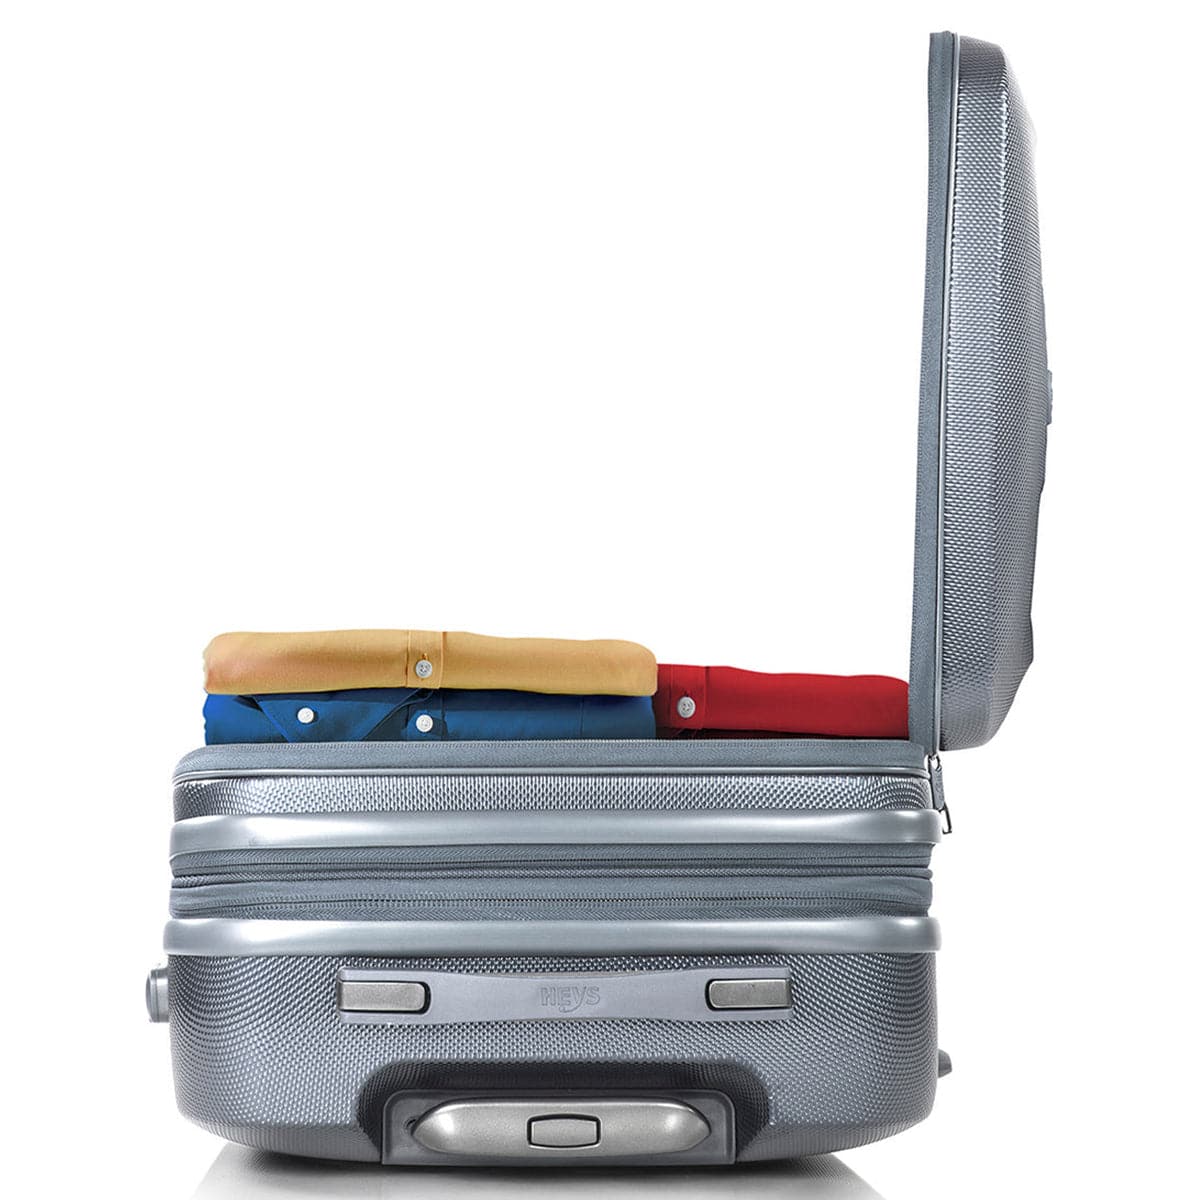 Heys Vantage 26" Smart Access Spinner Luggage